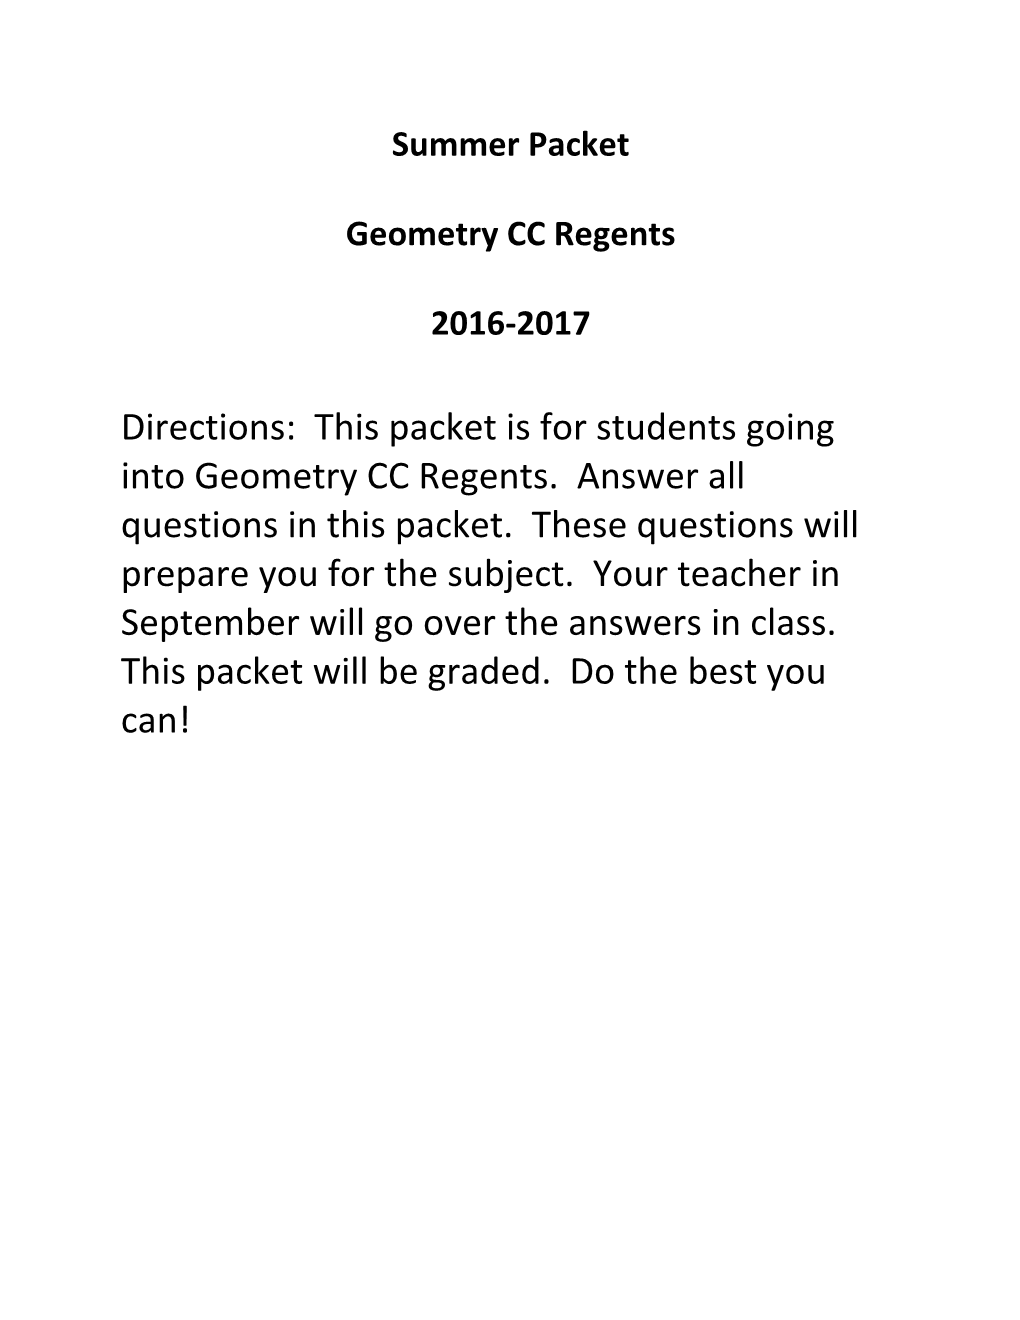 Geometry CC Regents